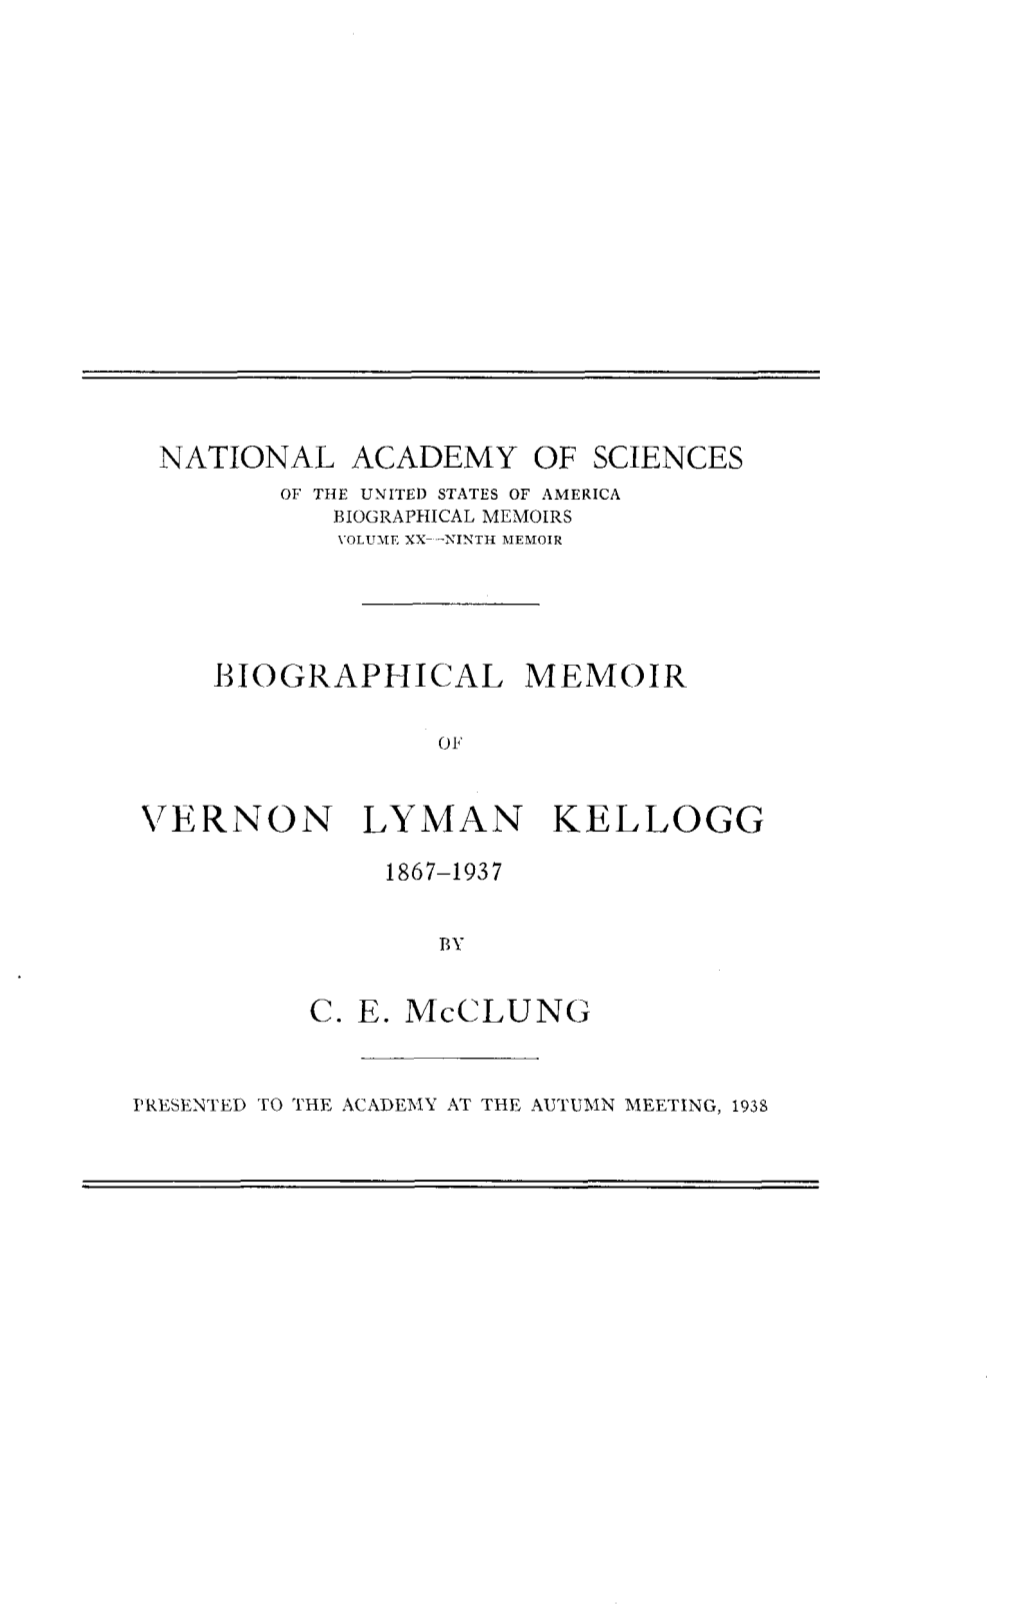 Vernon Lyman Kellogg 1867-1937